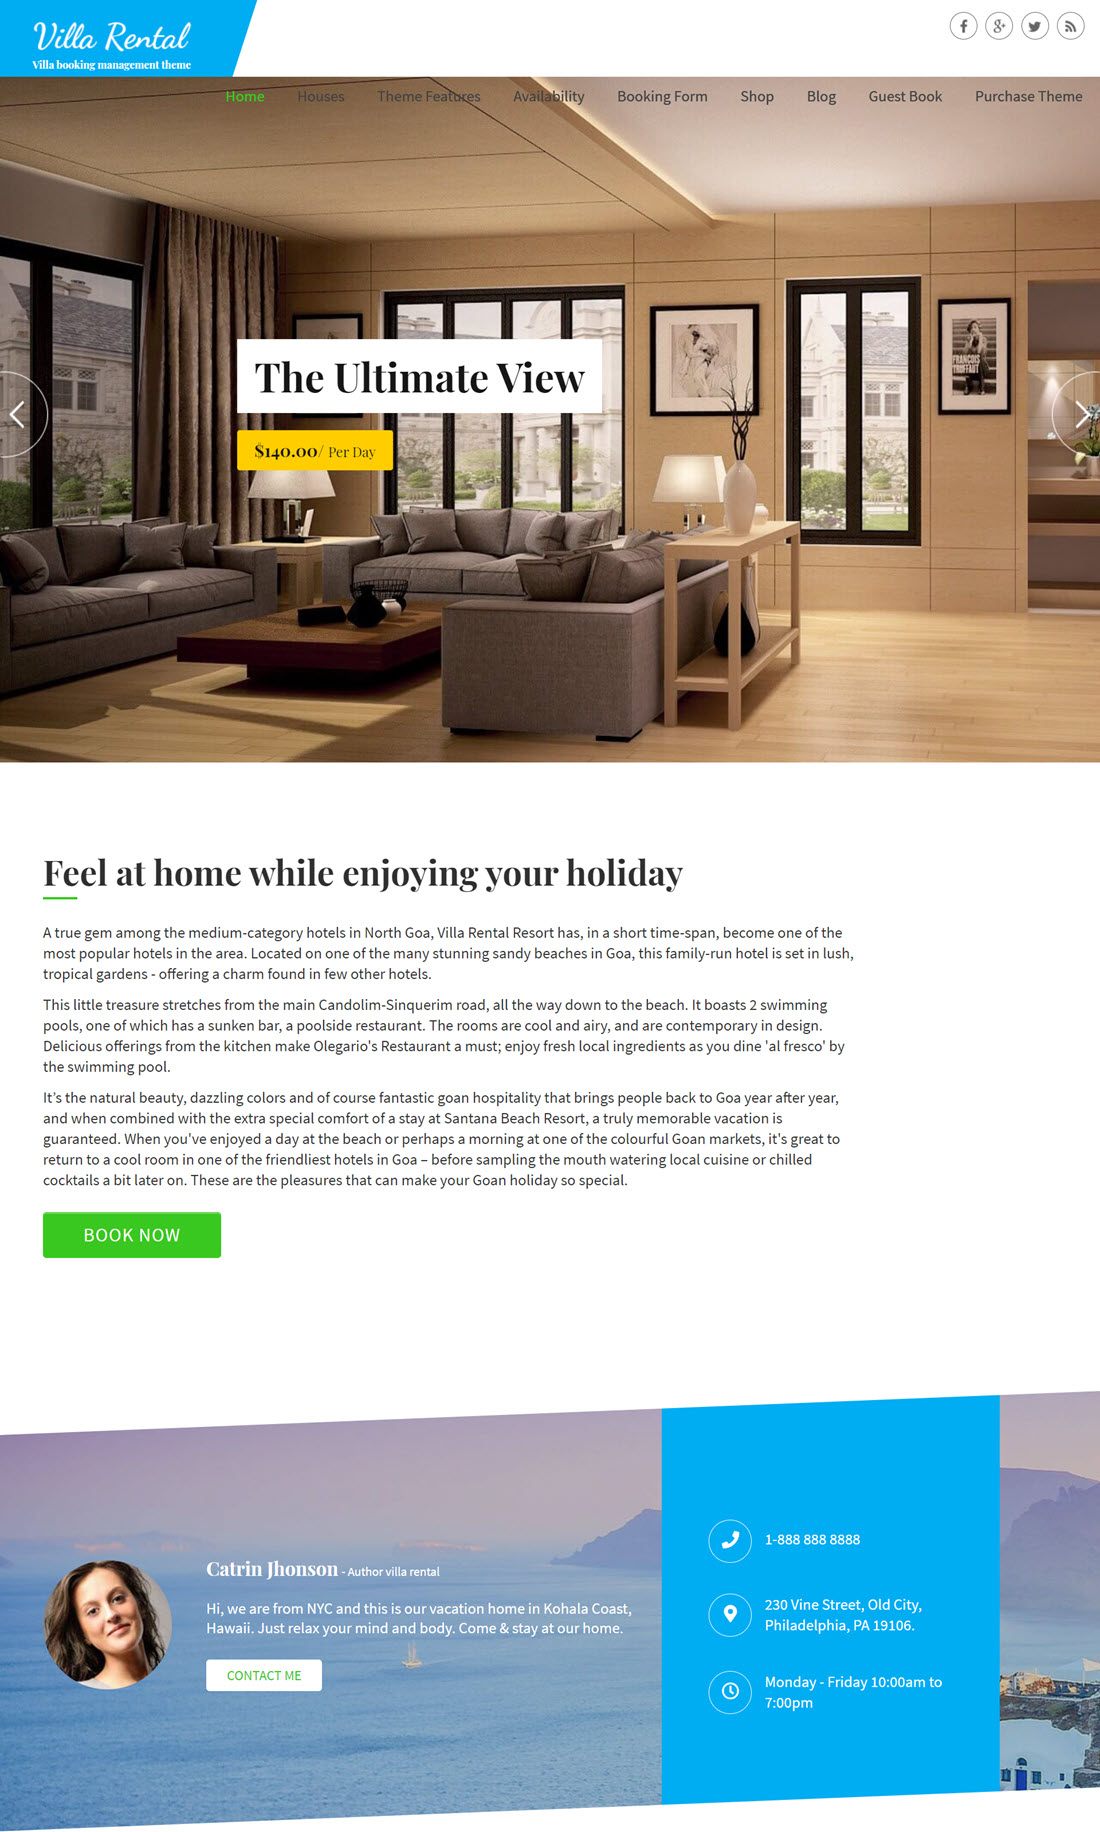 Villa Rental Hotel WordPress Themes Example